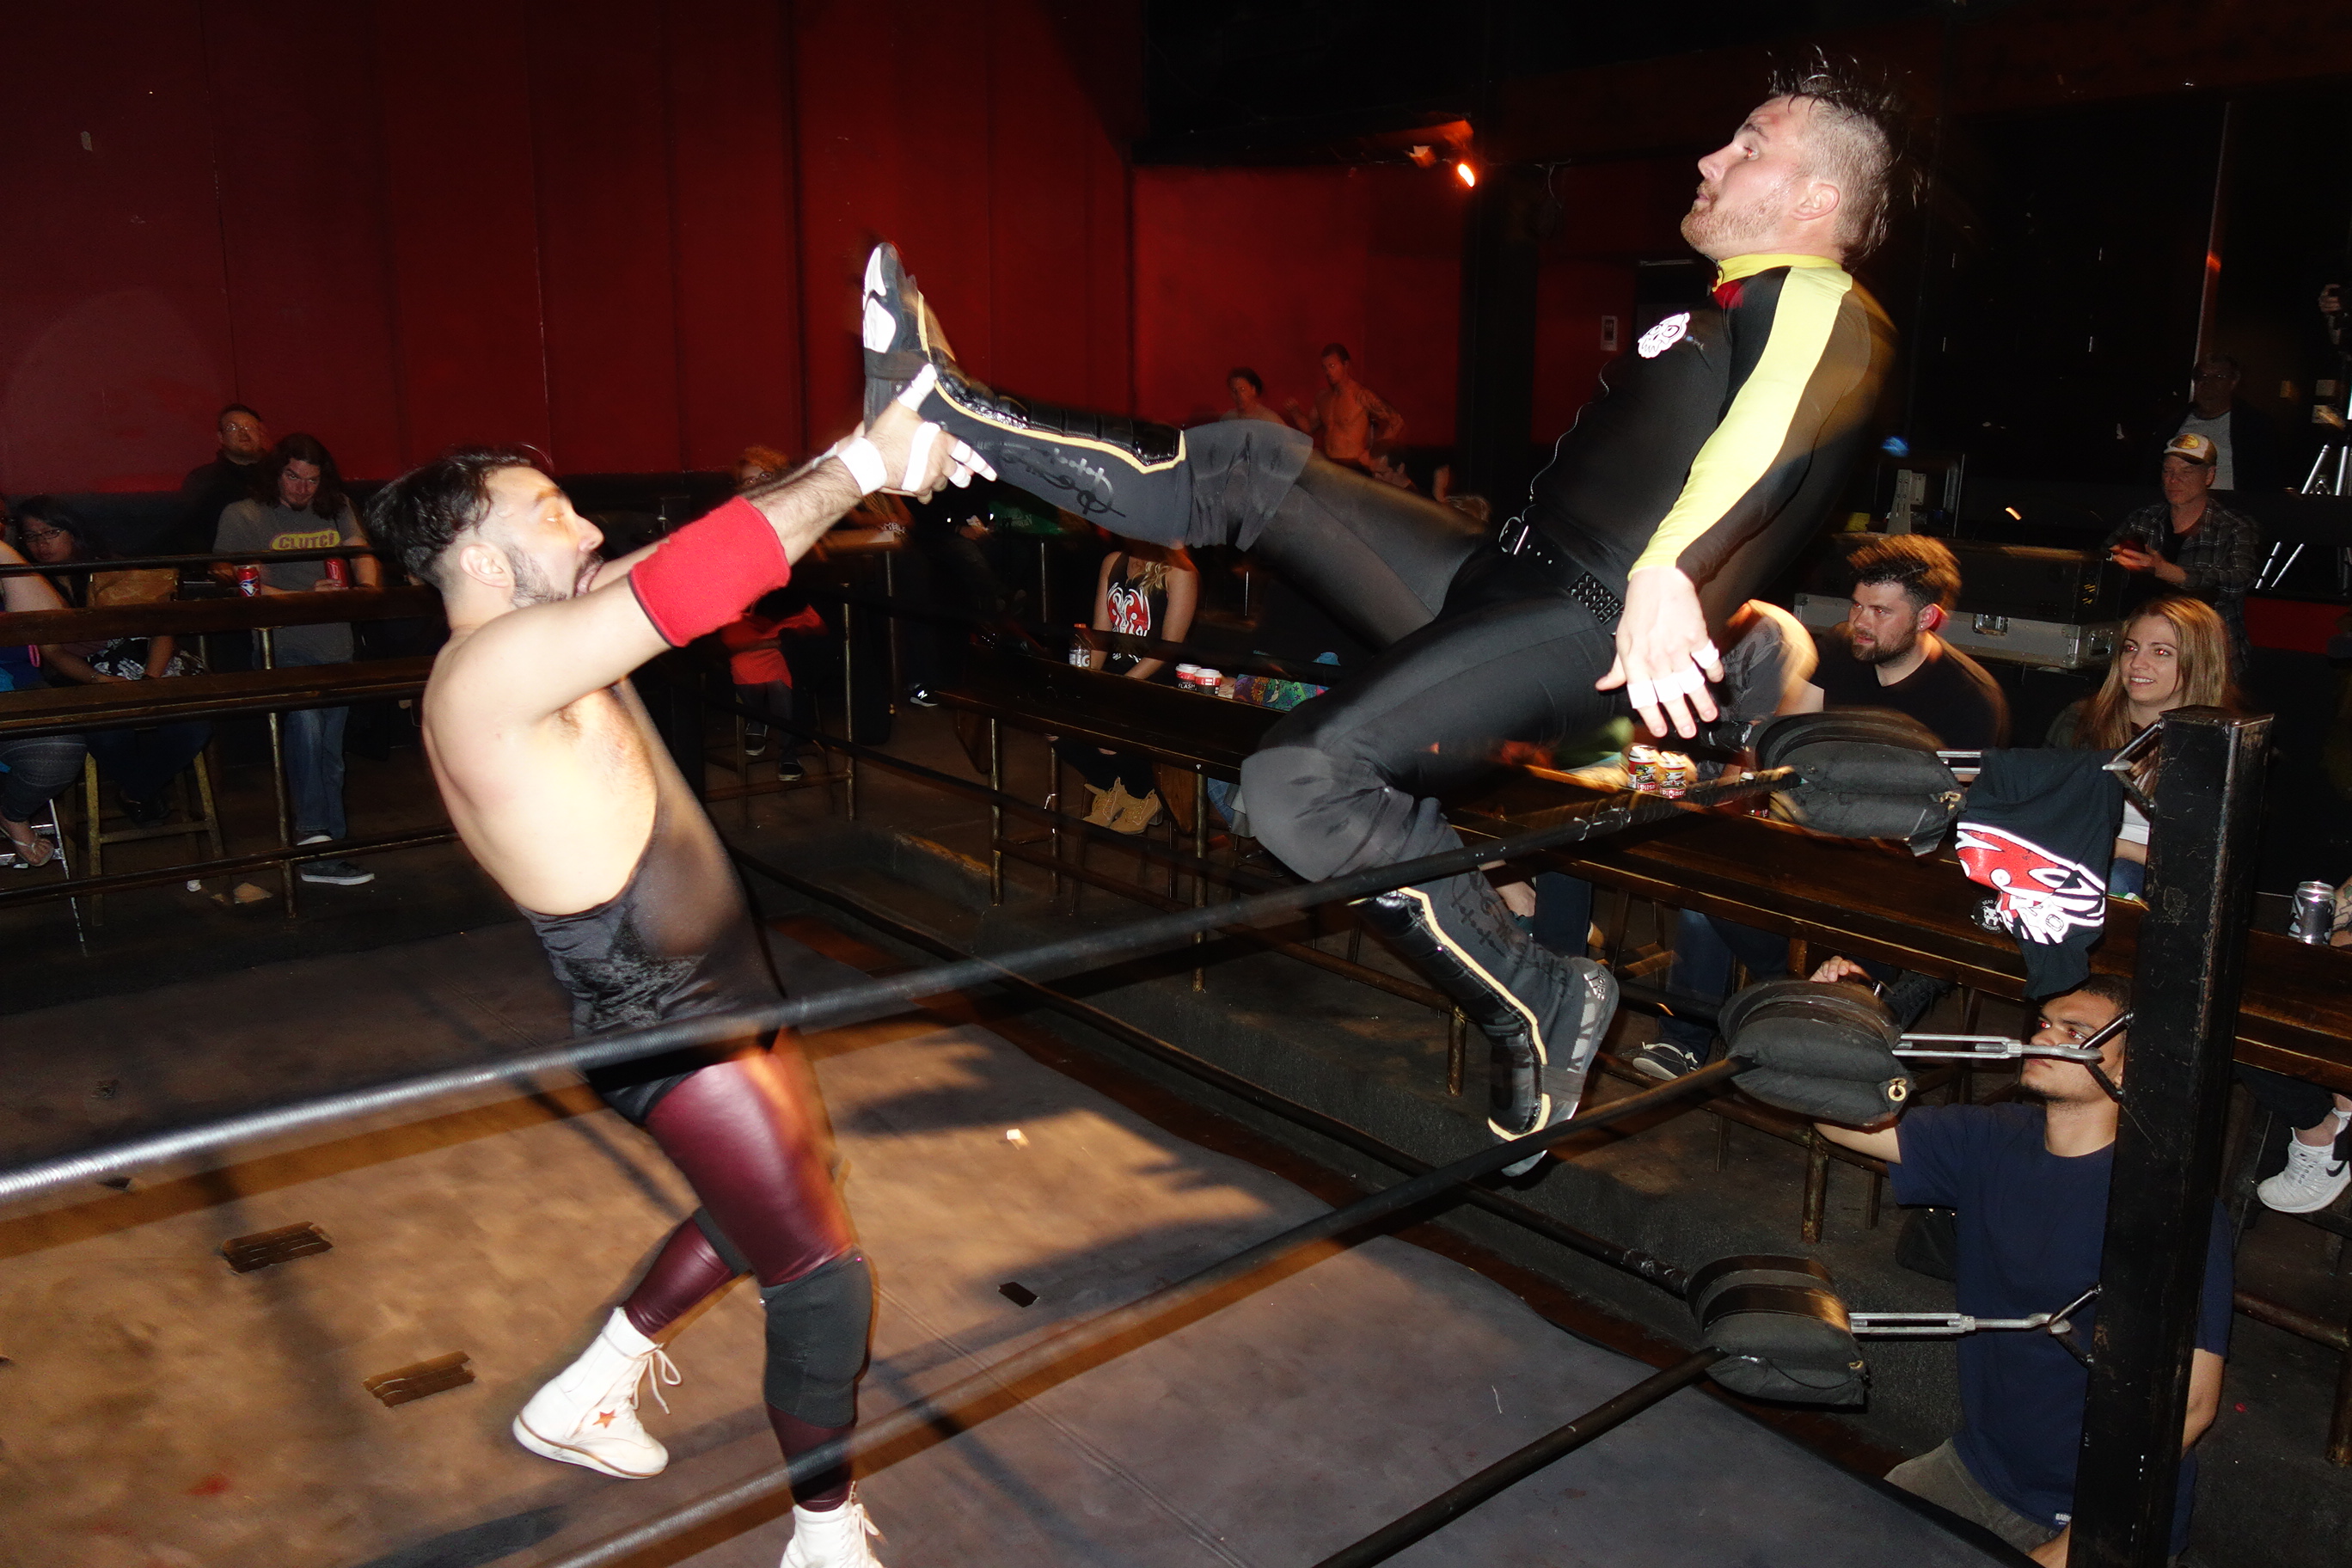 wrestler kicking gets caught